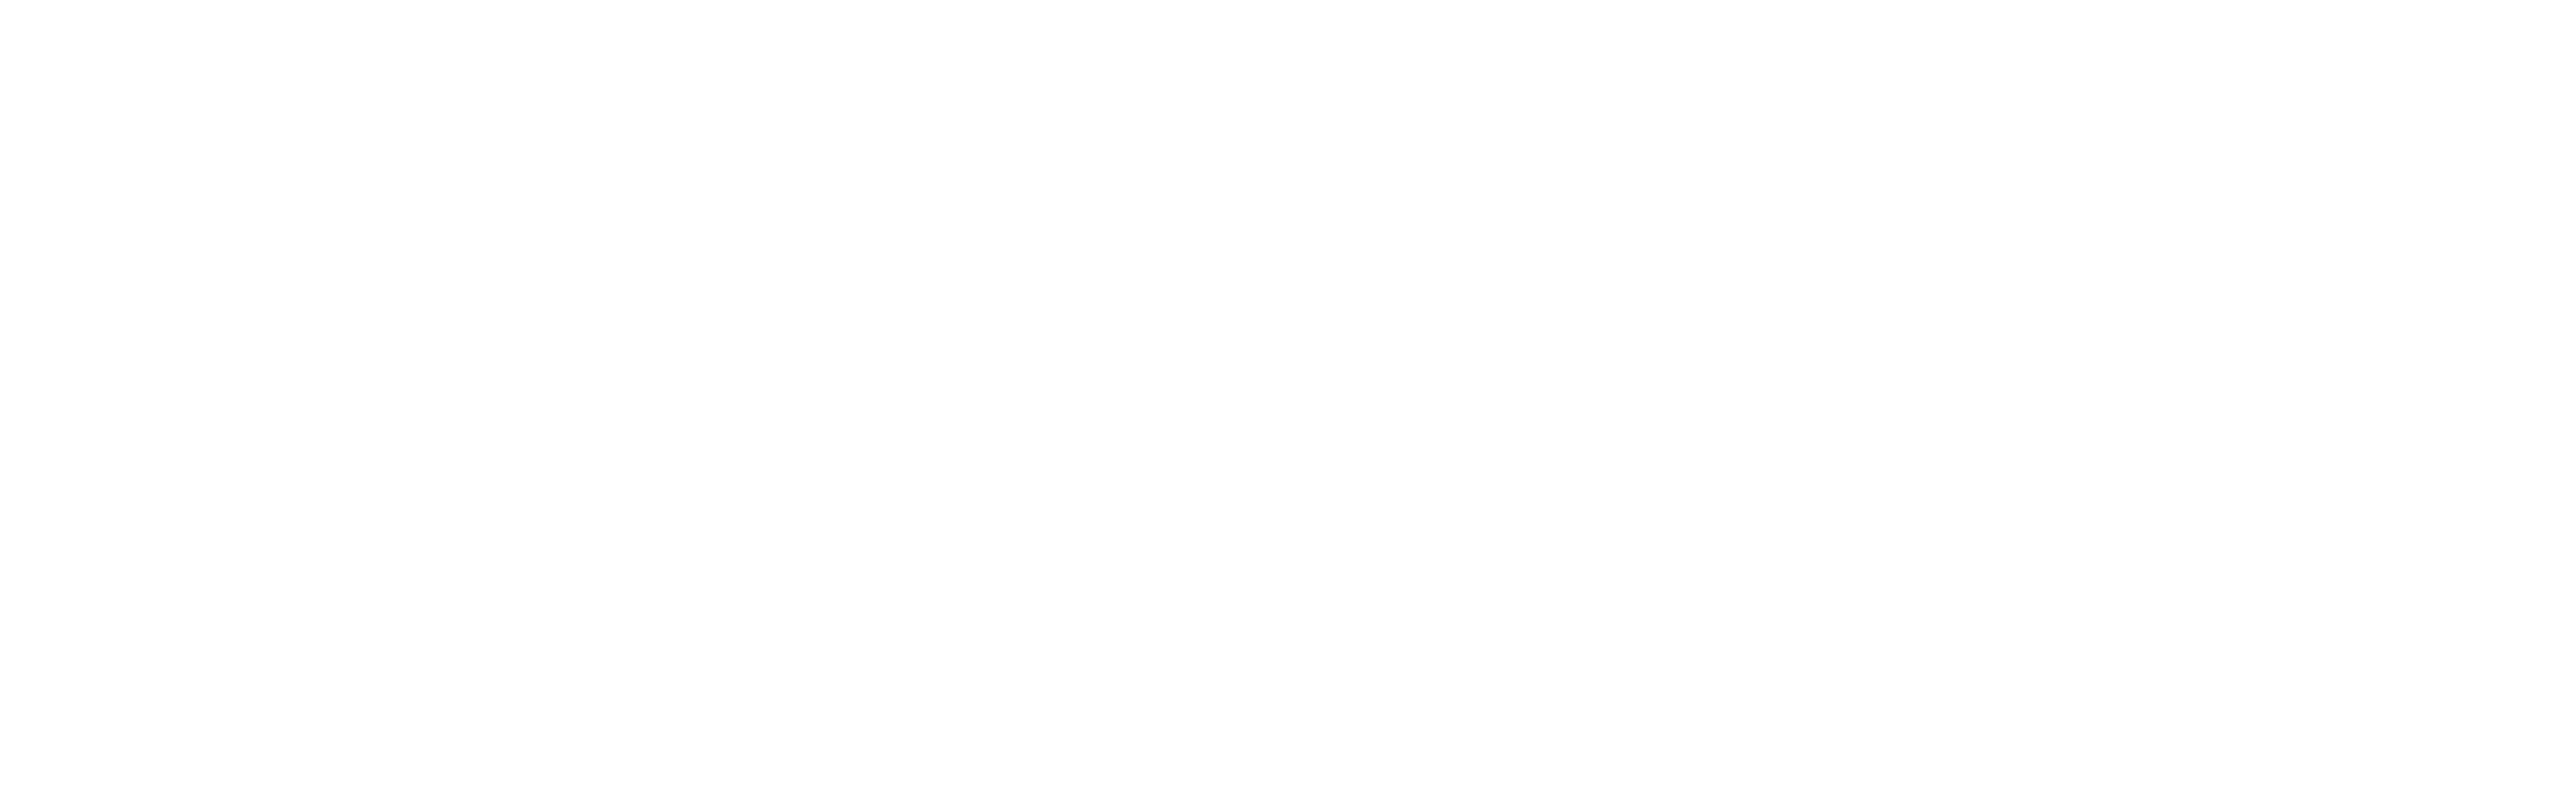 frendi fashions logo